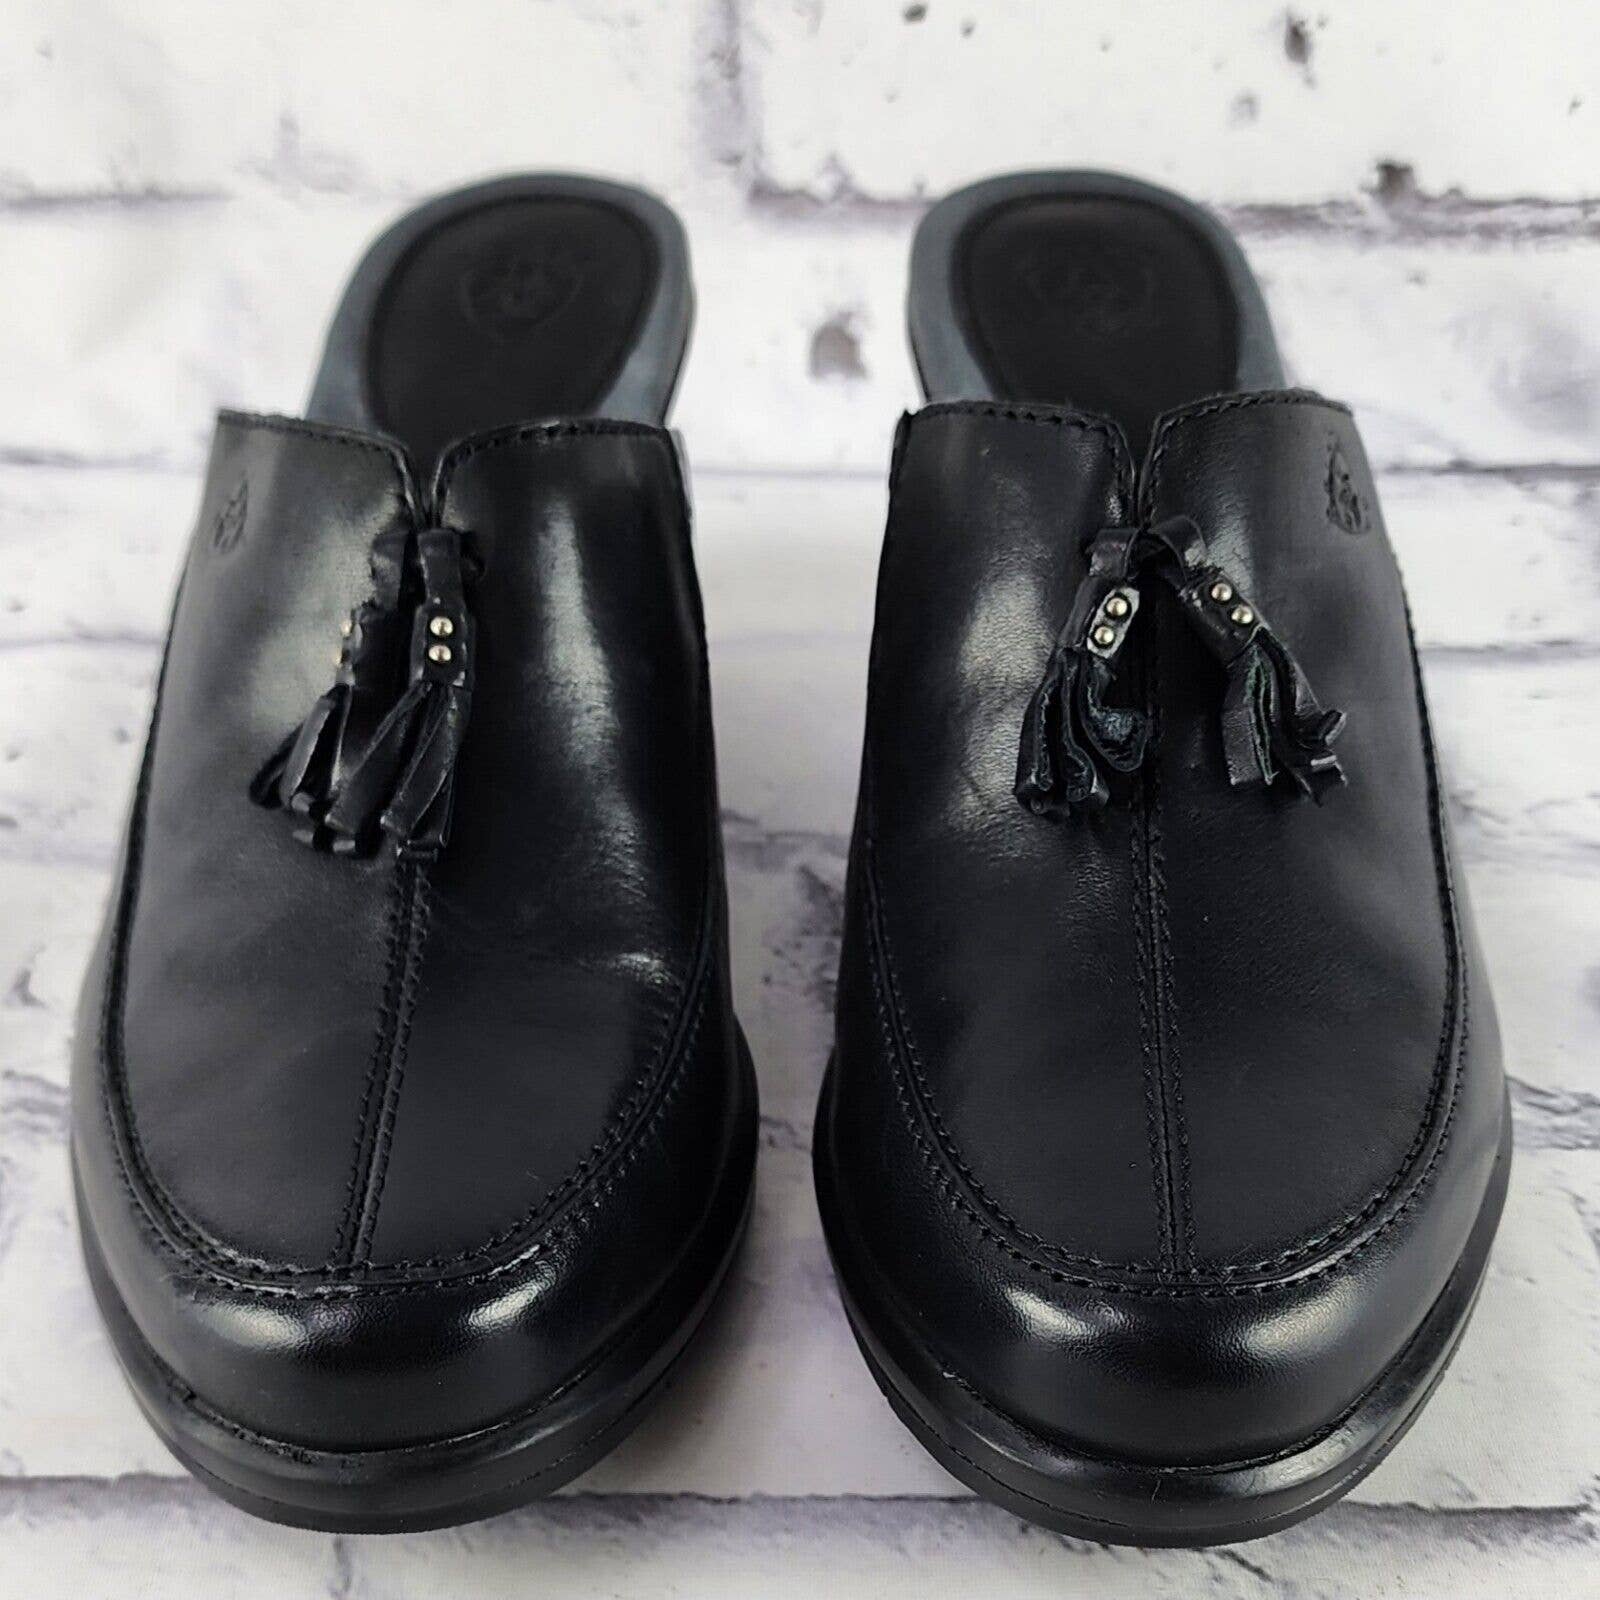 Ariat Tassel Wedge Mules Women's Size 6.5 B Black Leather Casual Slip On Heels